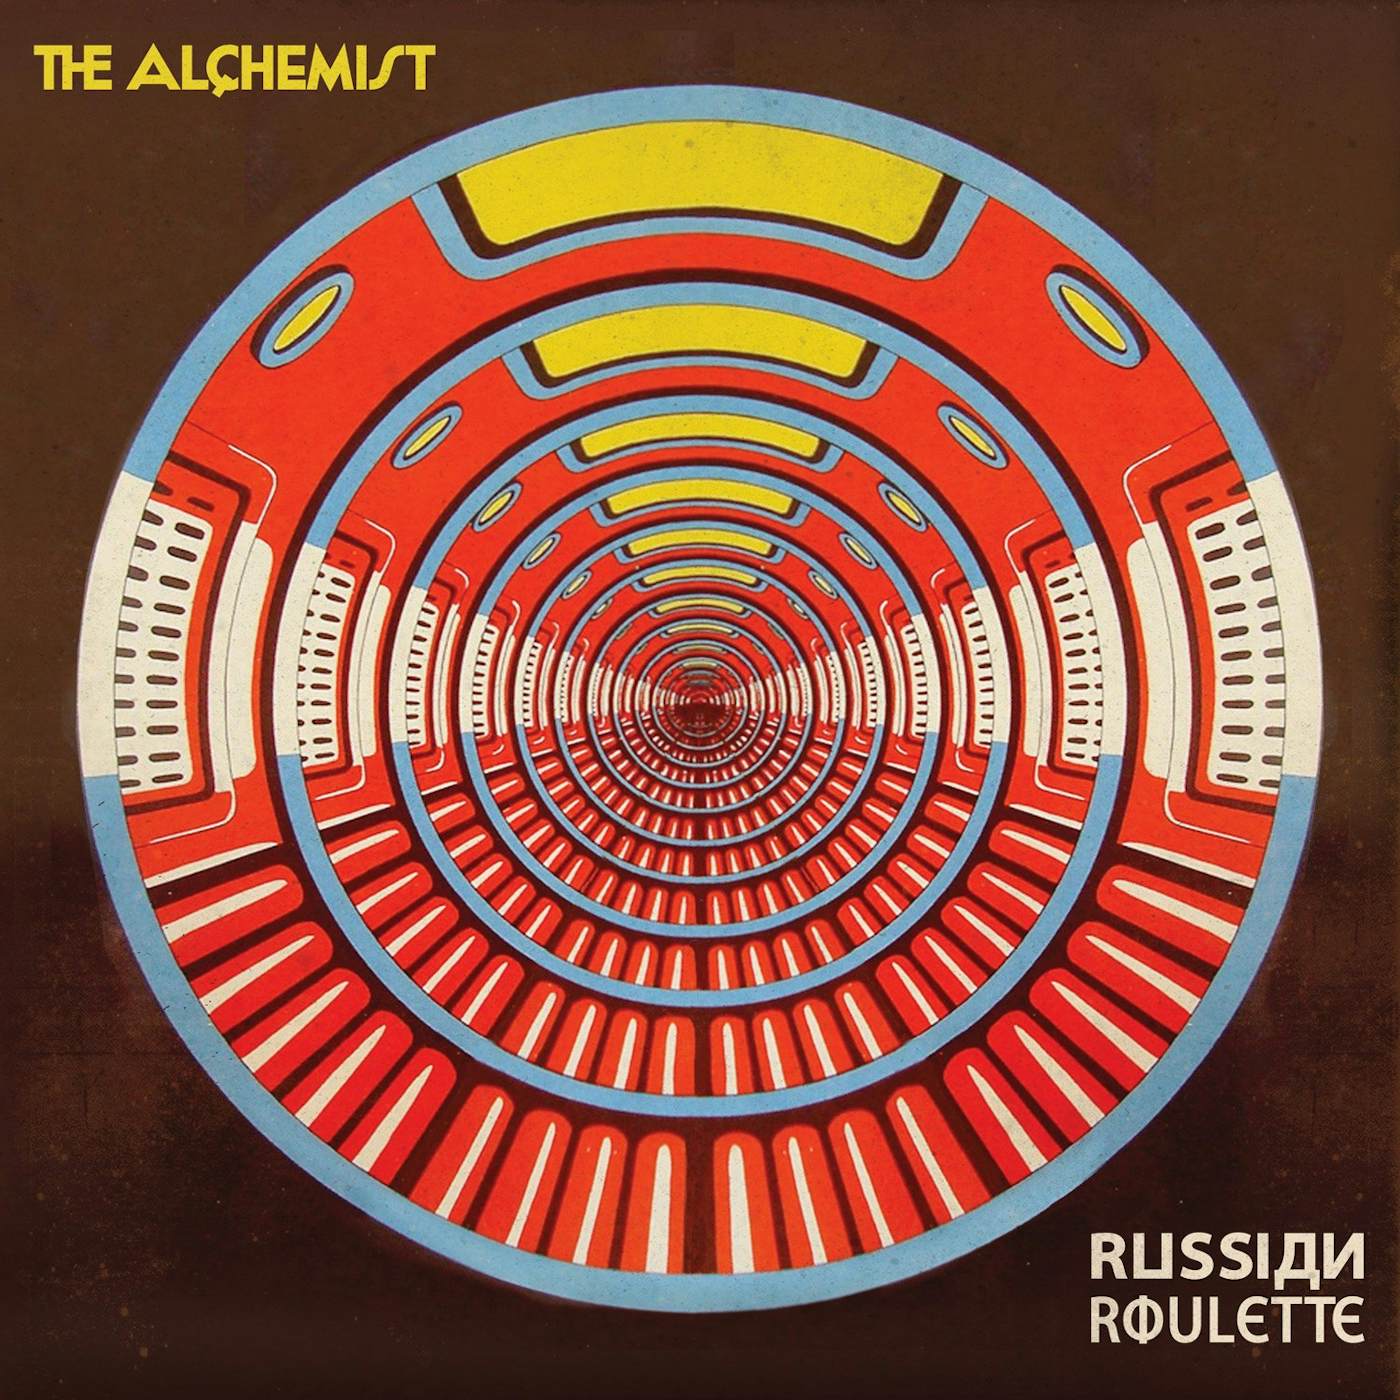 The Alchemist RUSSIAN ROULETTE CD